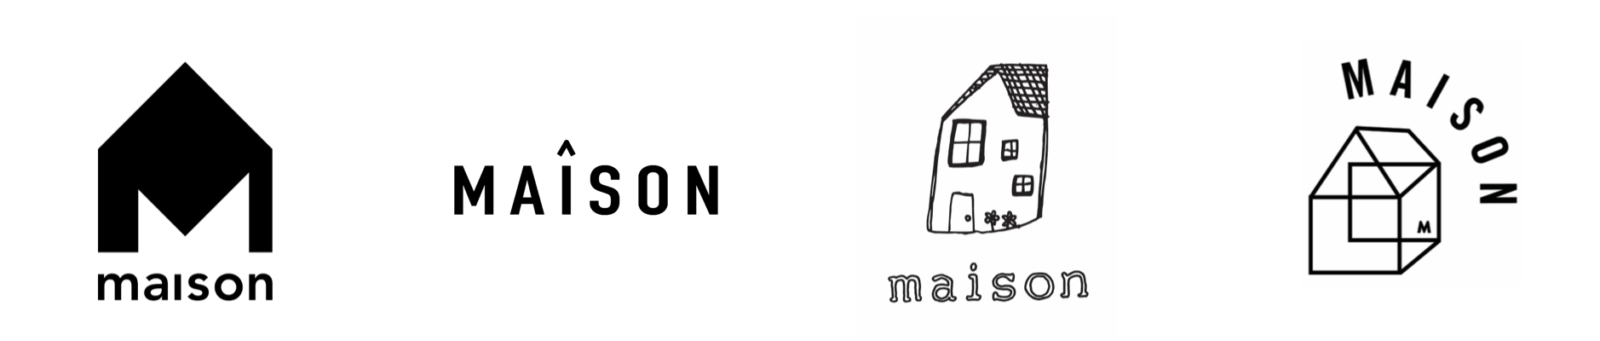 Maison Restaurant Branding - Creative Exploration